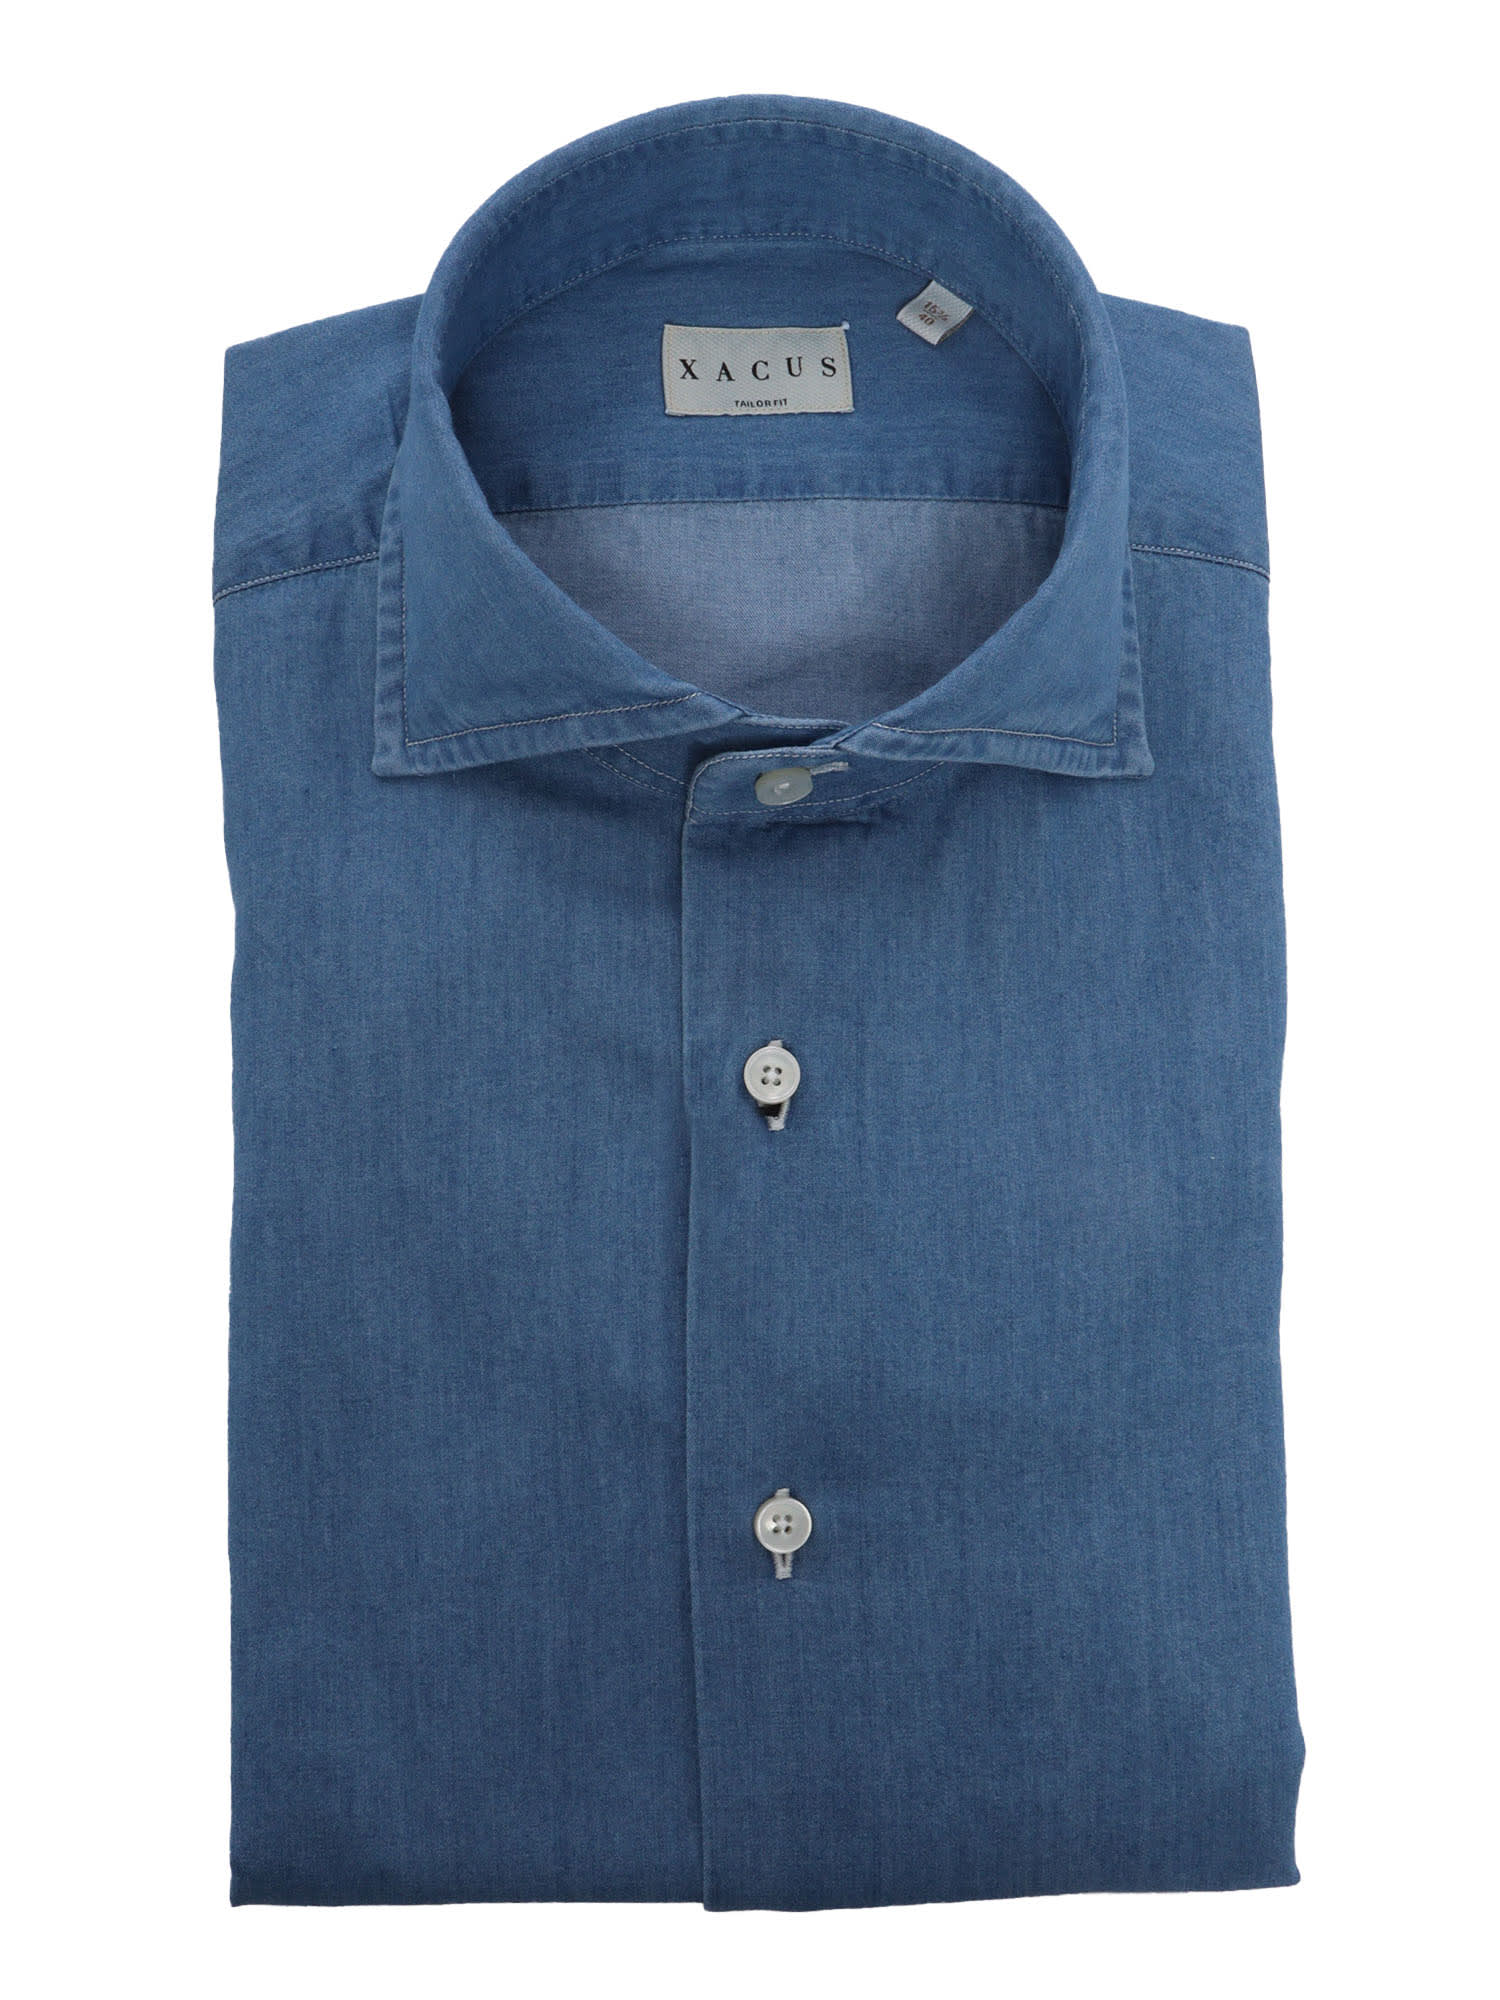 Shop Xacus Blue Cotton Shirt